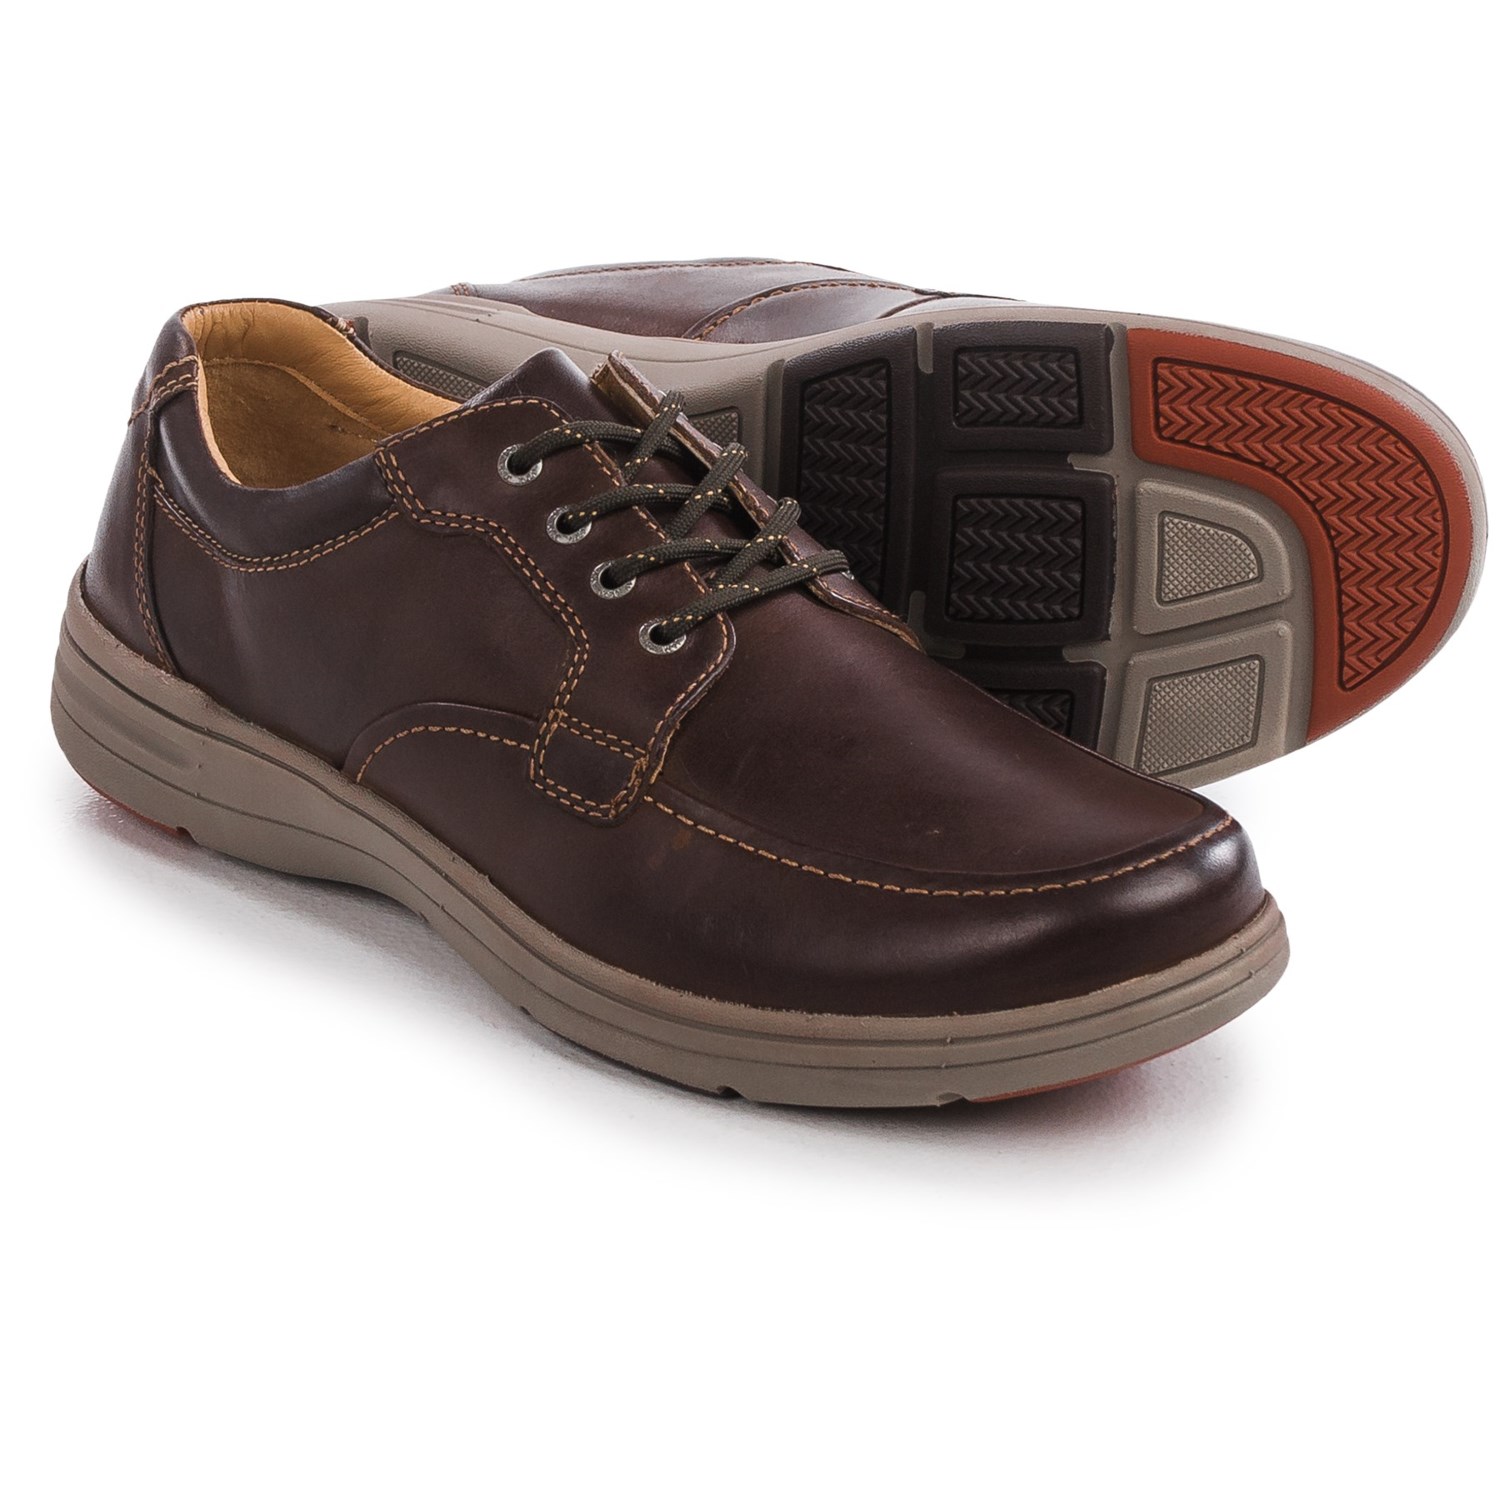 Johnston & Murphy Matthews Moc-Toe Shoes (For Men) - Save 44%